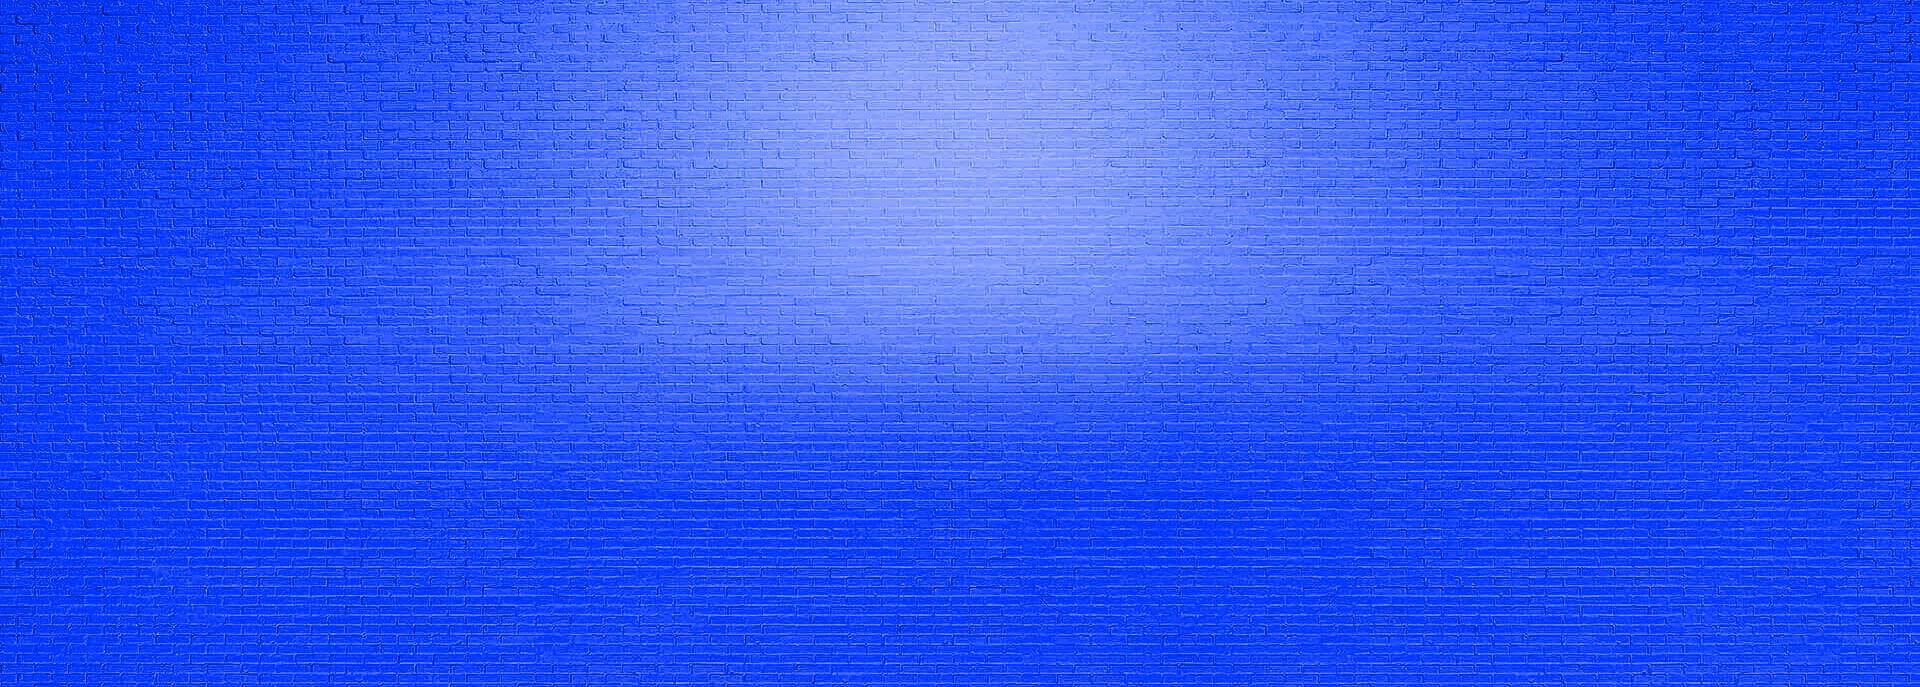 Blue Briks Background Design Banner Free Vector Download